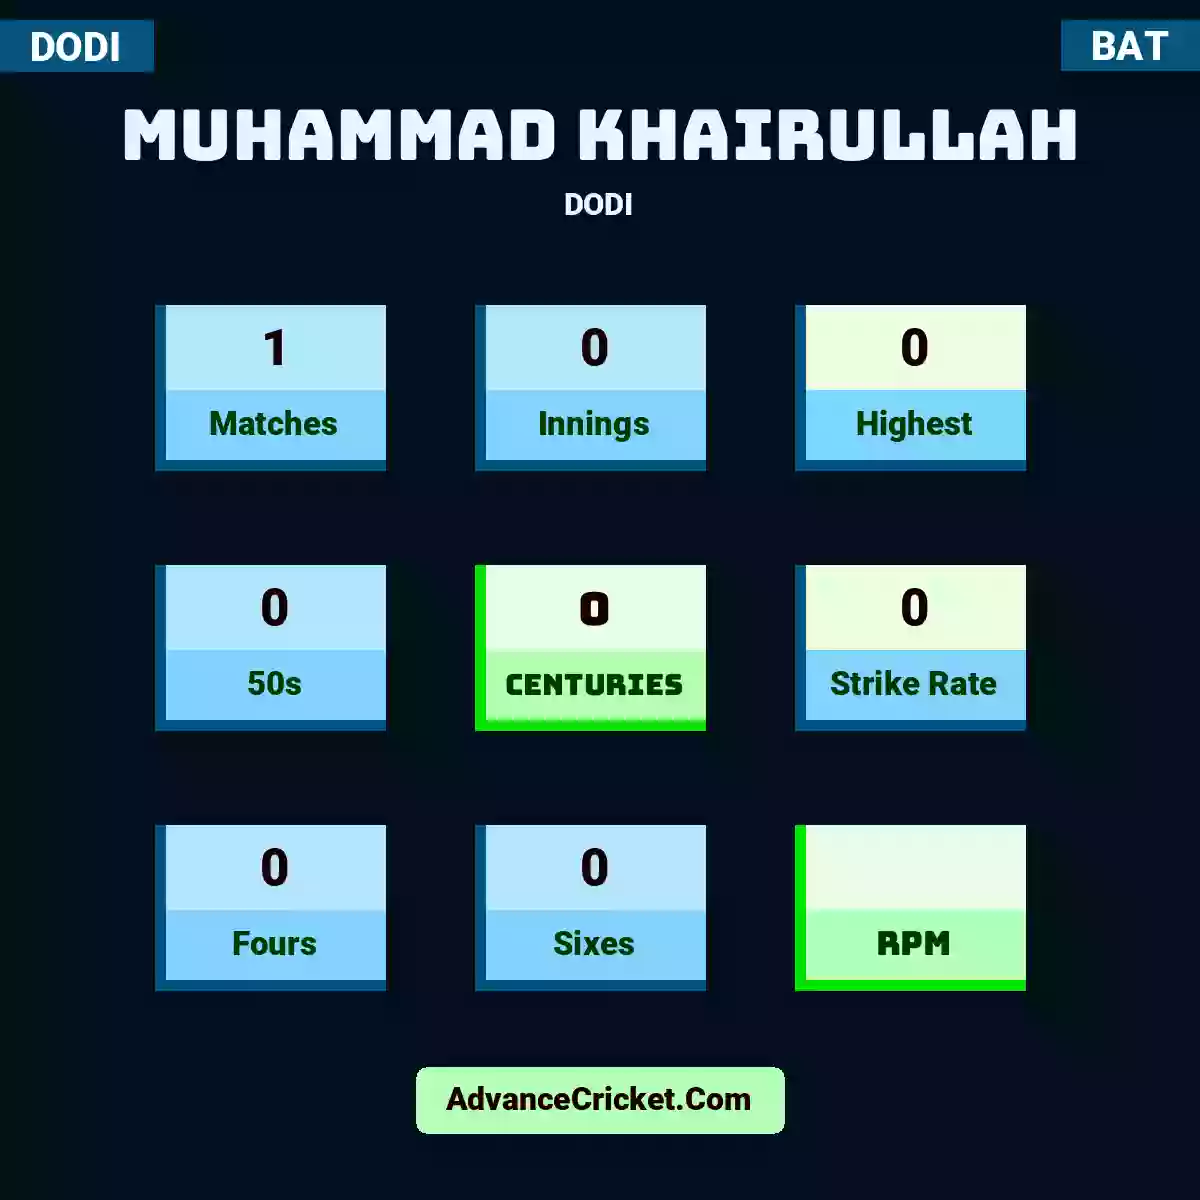 Muhammad Khairullah DODI , Muhammad Khairullah played 1 matches, scored 0 runs as highest, 0 half-centuries, and 0 centuries, with a strike rate of 0. M.Khairullah hit 0 fours and 0 sixes.